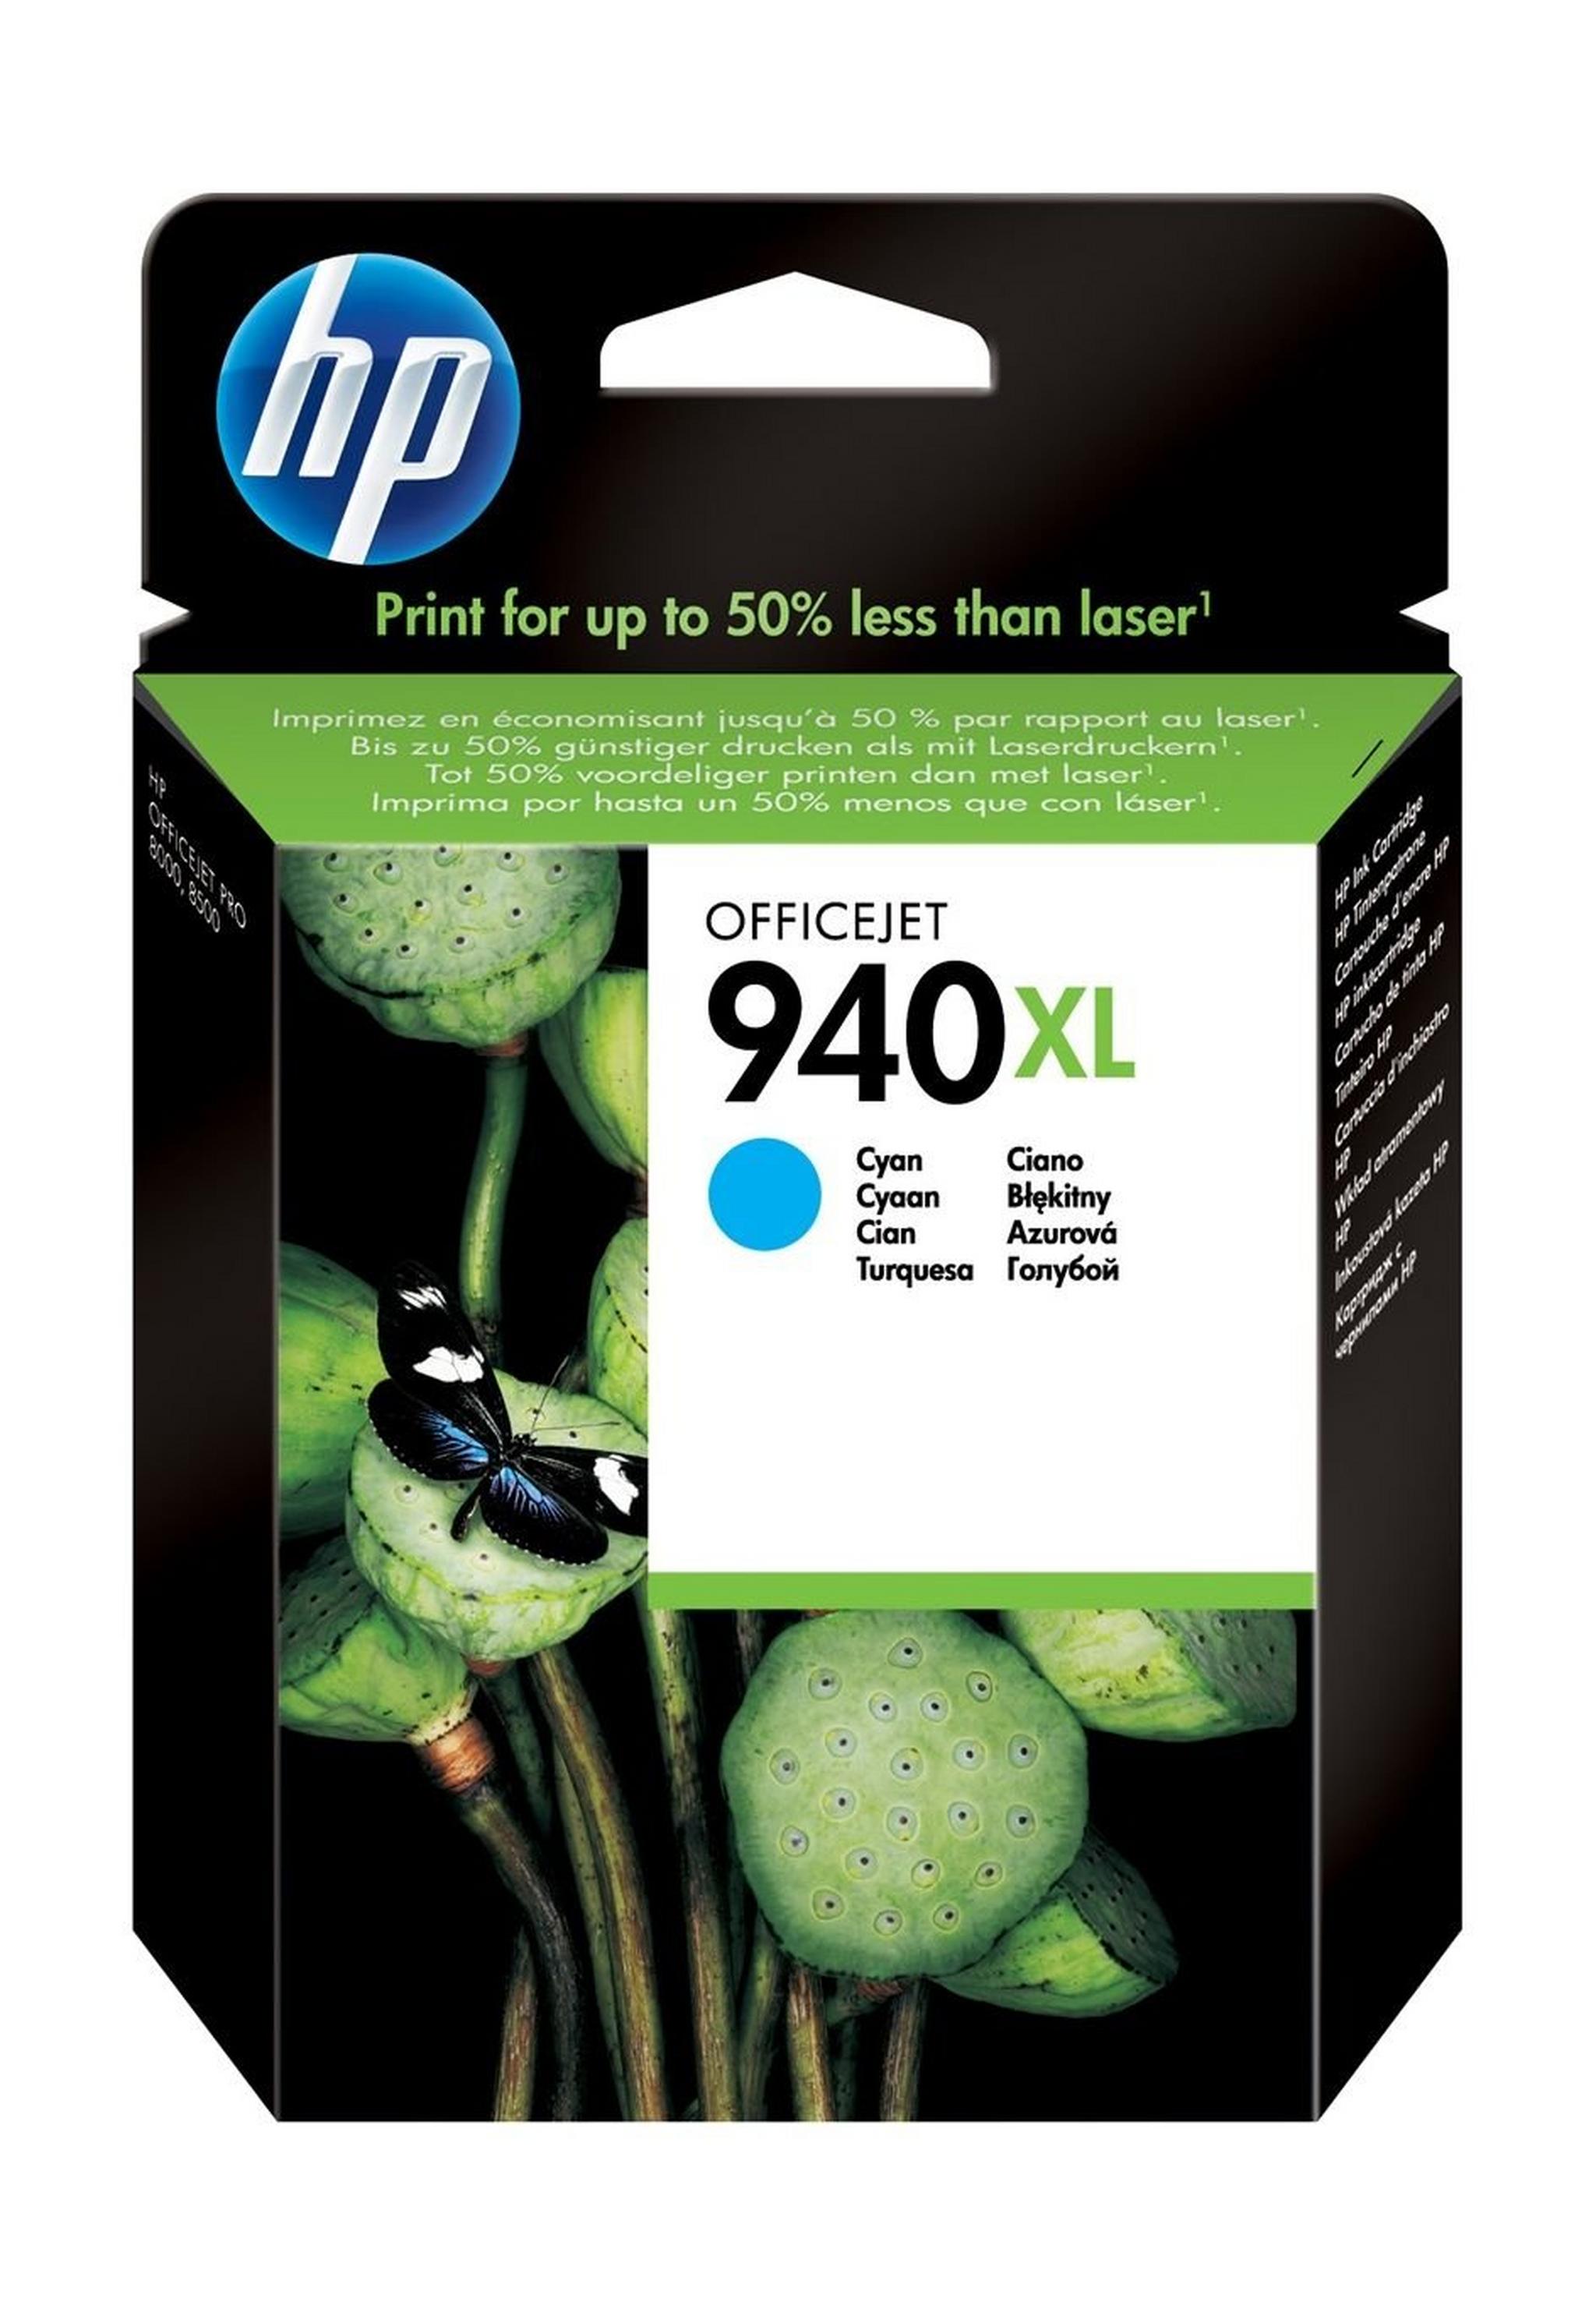 HP Ink 940XL Cyan Ink